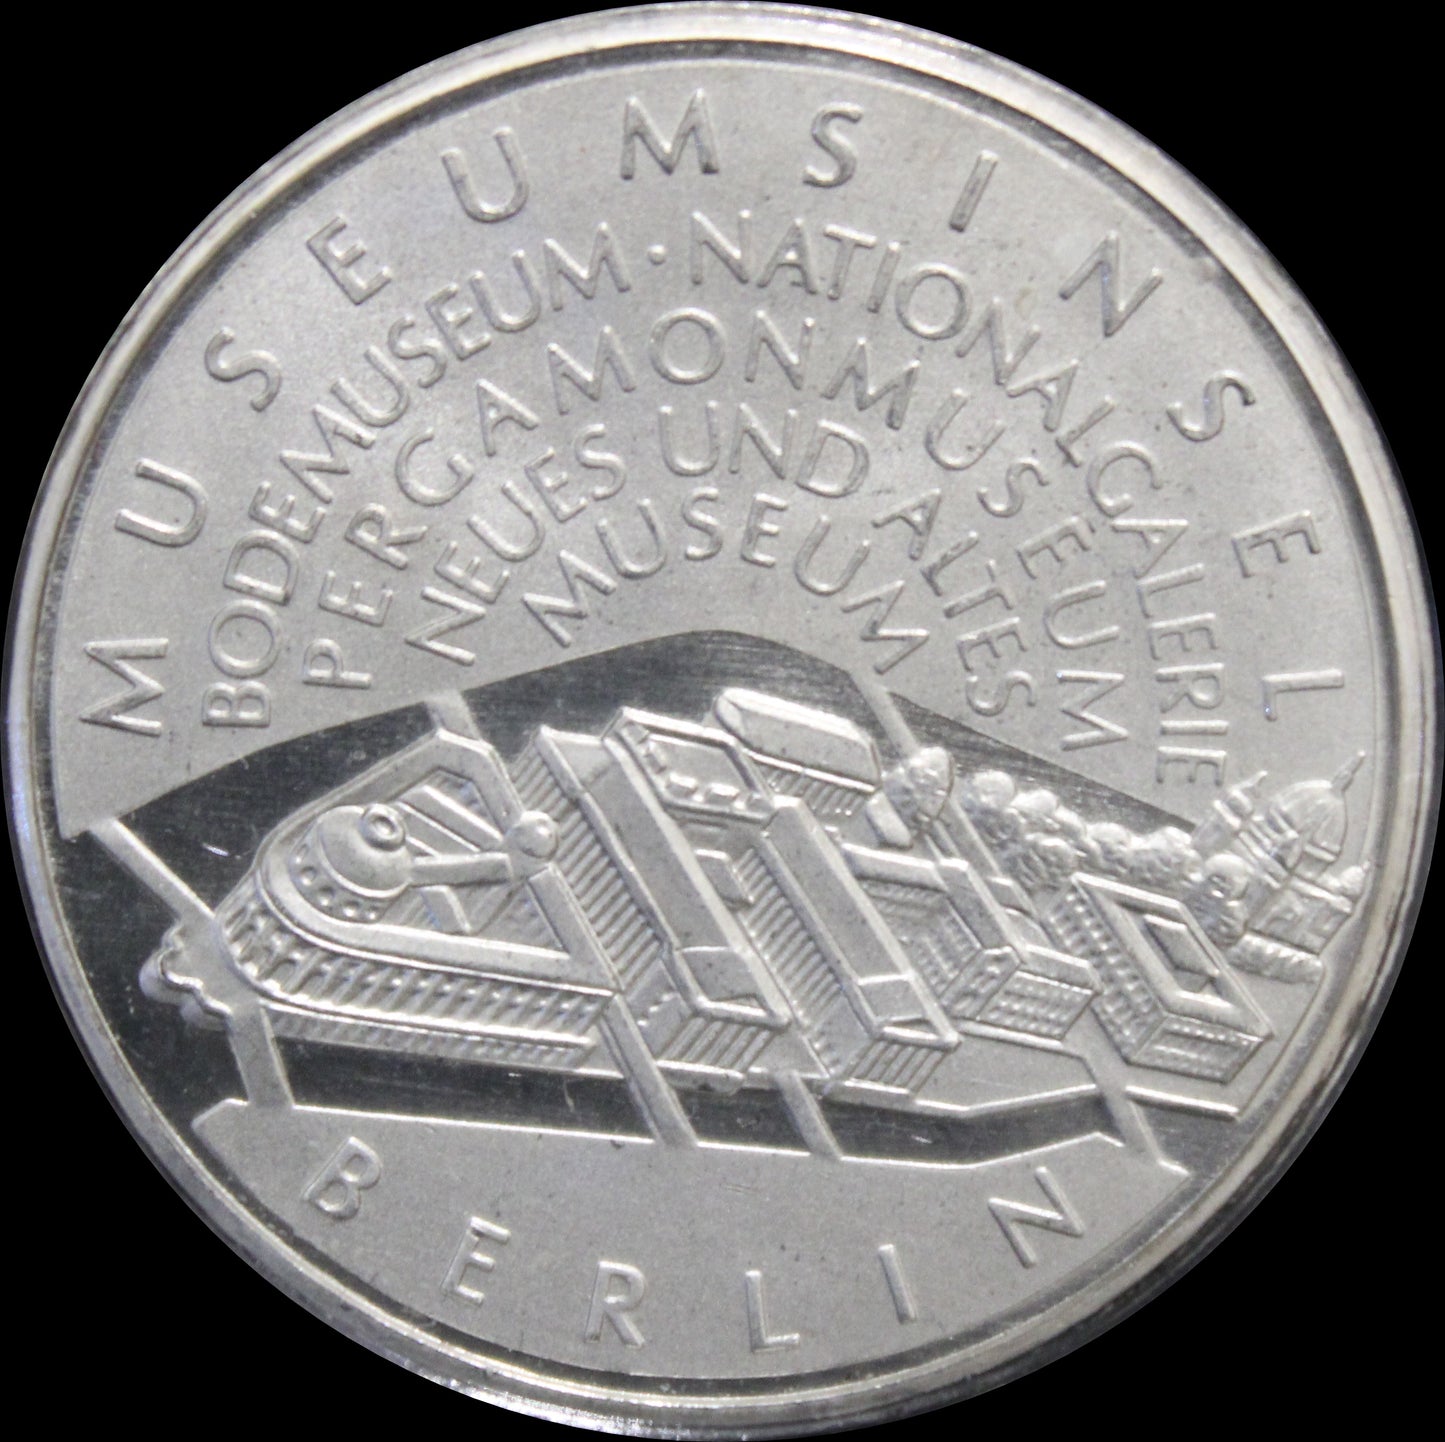 MUSEUMSINSEL BERLIN, Serie 10 € Silber Gedenkmünzen Deutschland, Stempelglanz, 2002